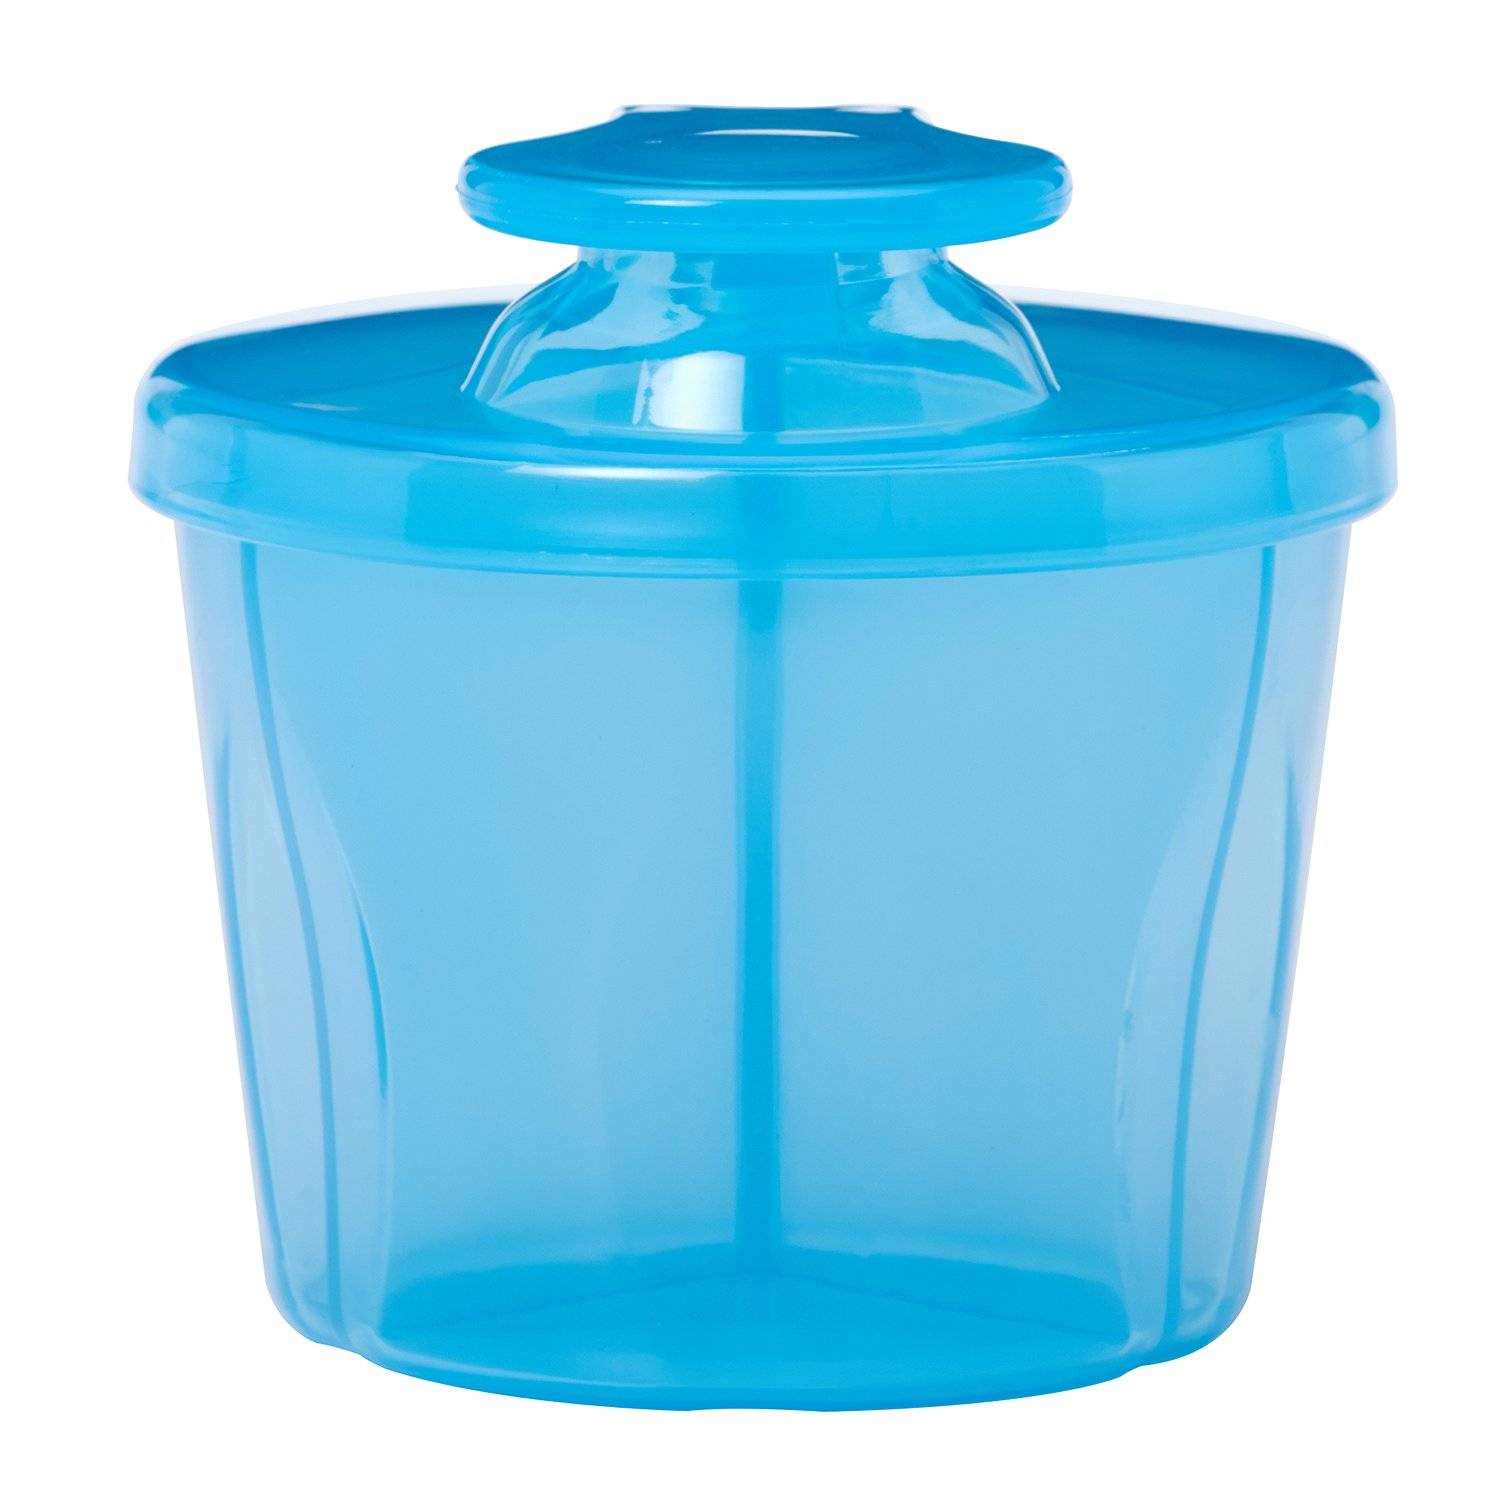 фото Dr.brown's контейнер-дозатор сухой смеси, синий ac039 dr. brown's